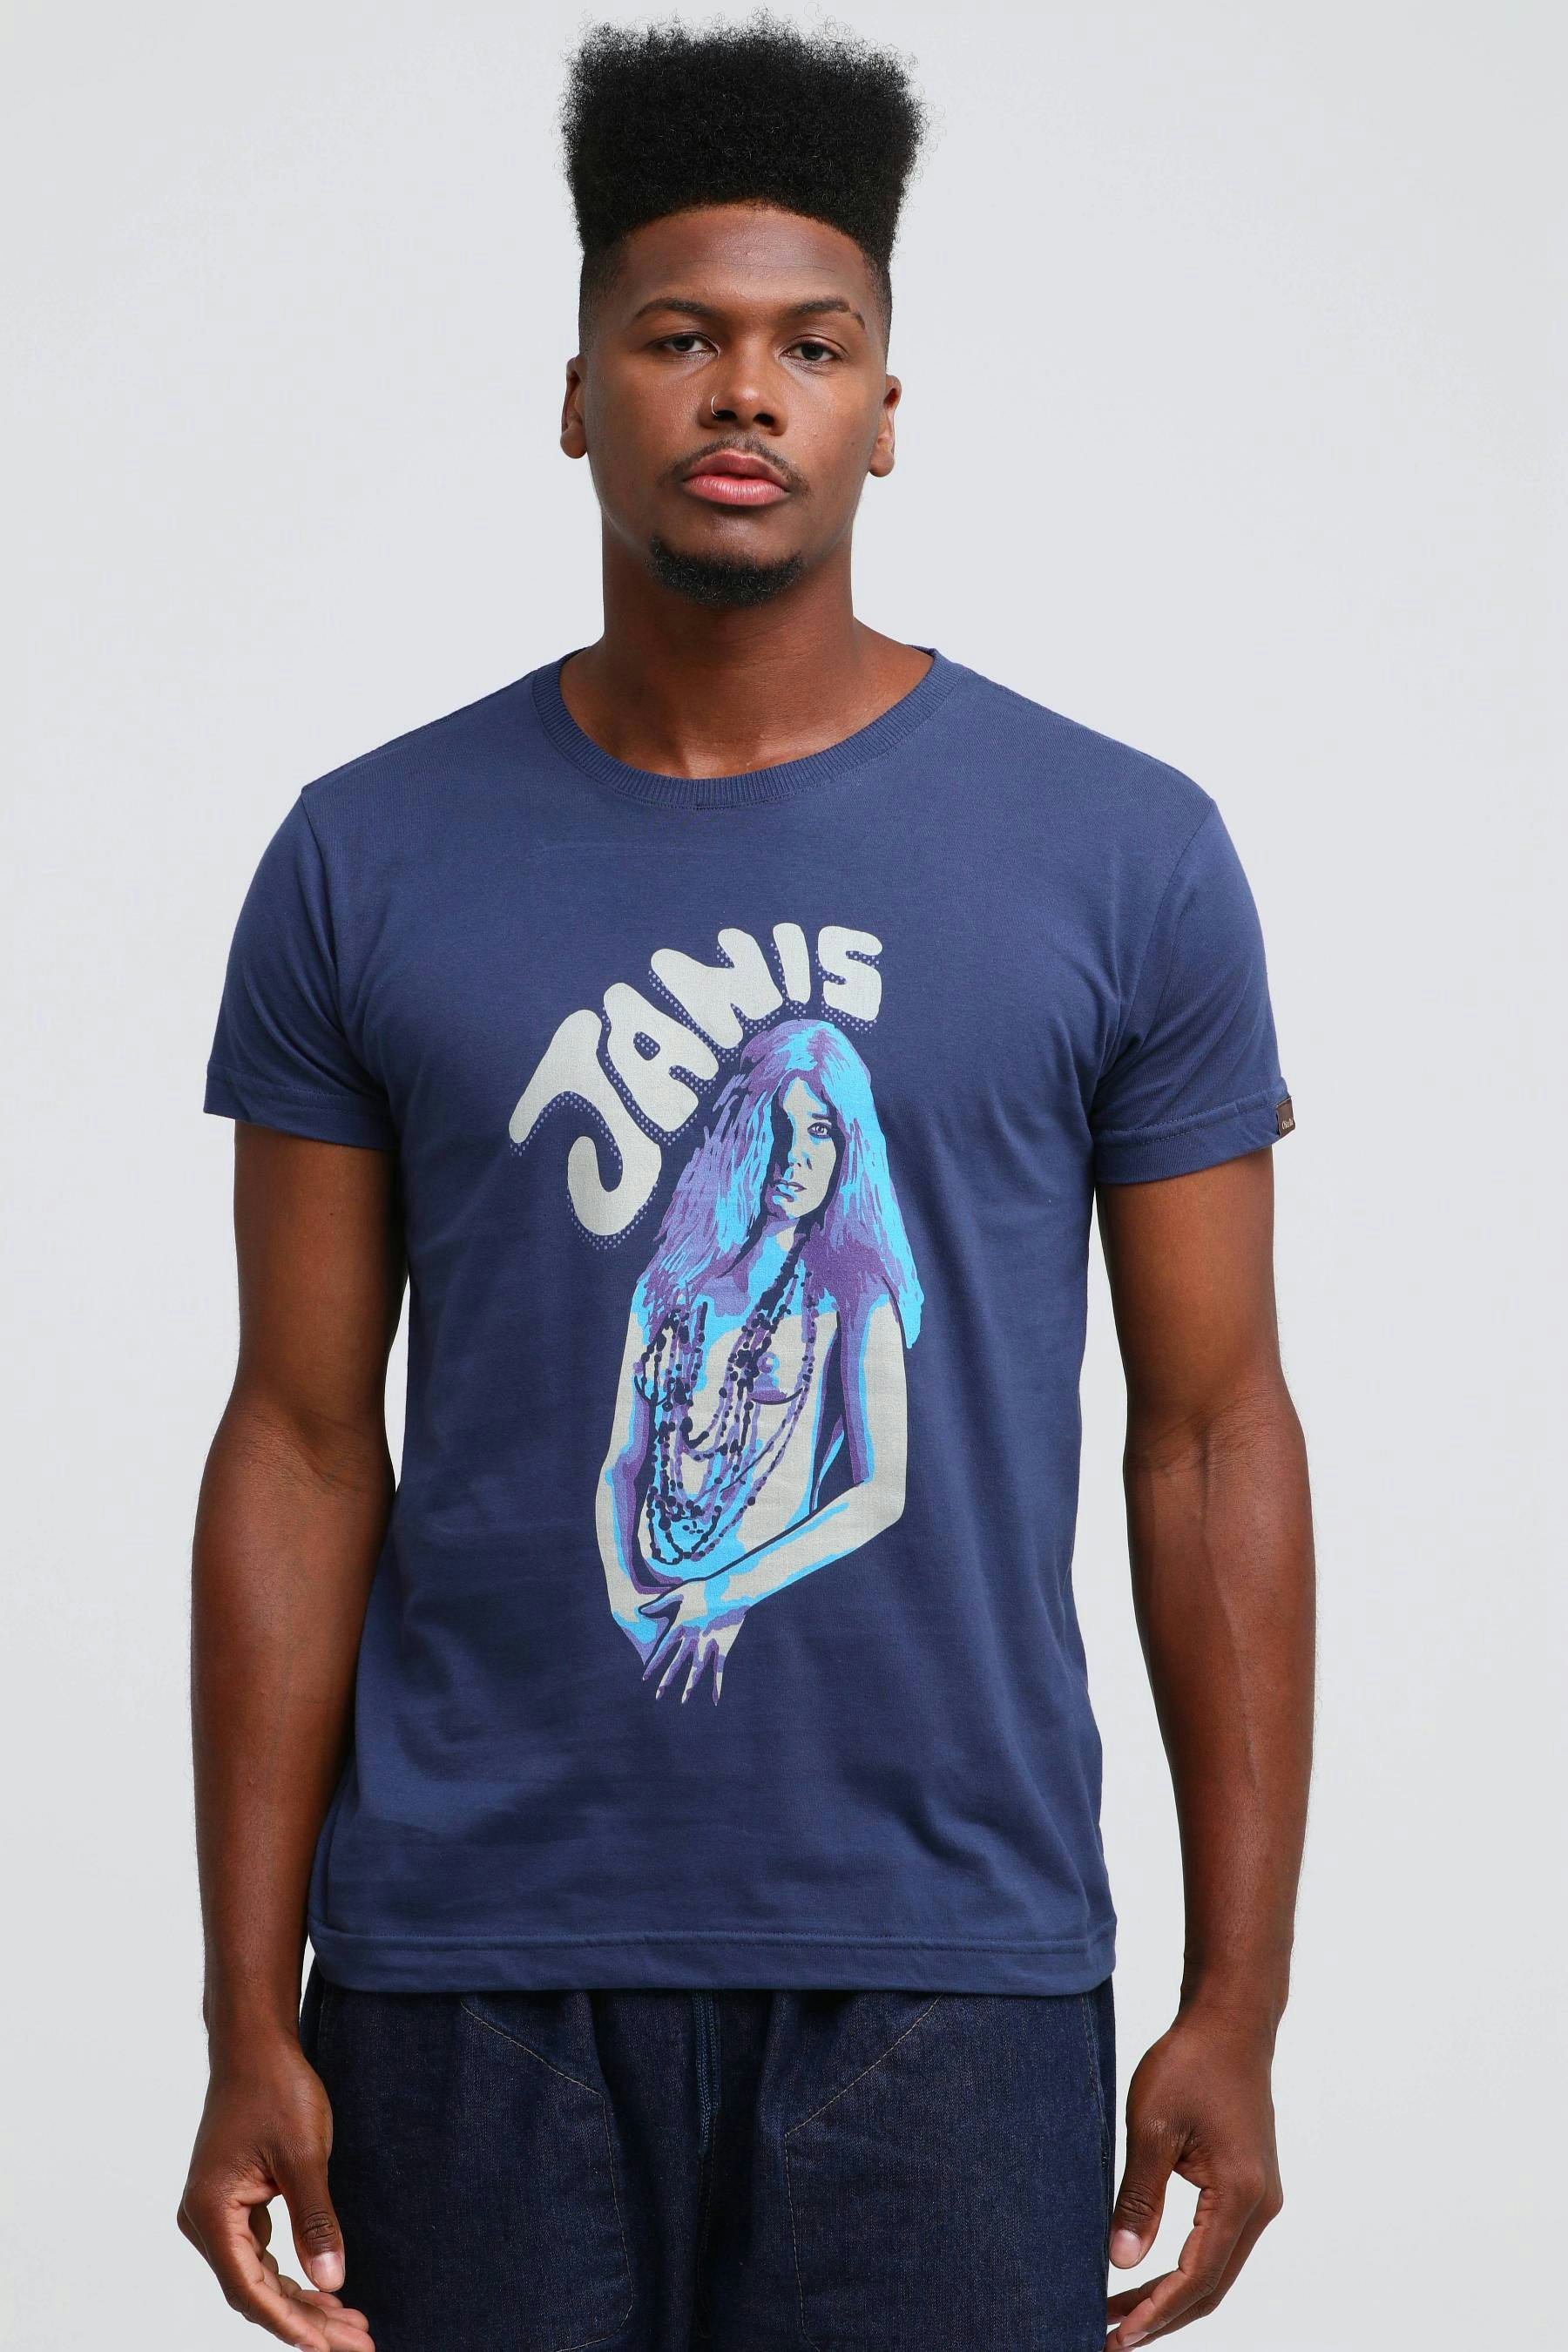 Camiseta Janis Joplin